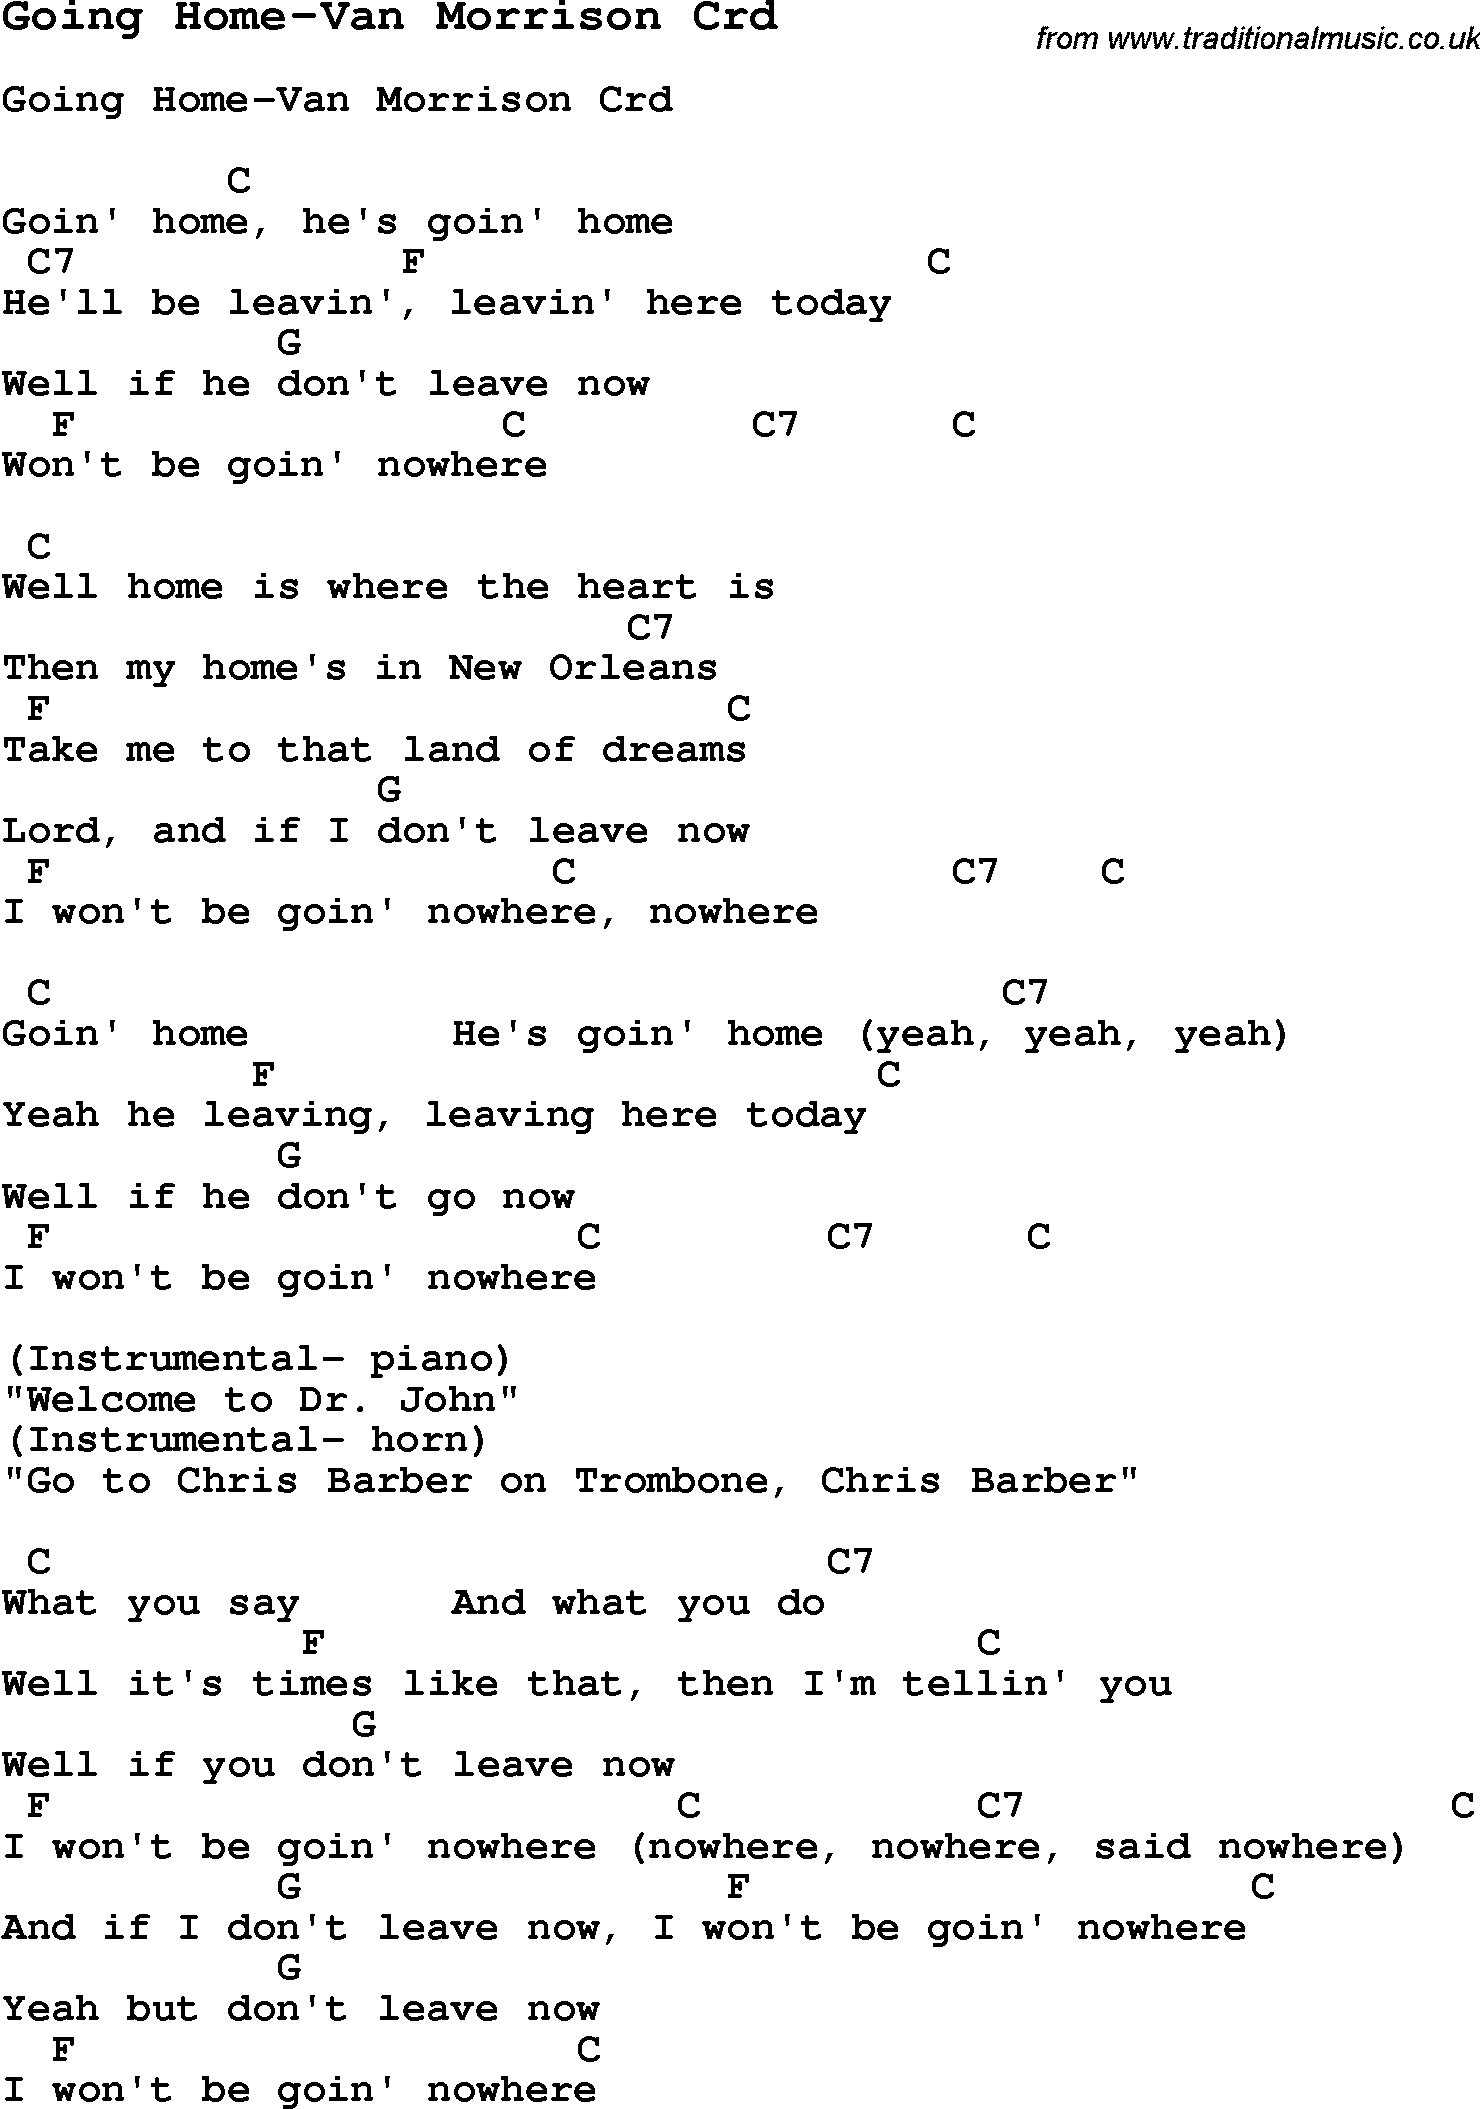 Skiffle Song Lyrics for Going Home-Van Morrison with chords for Mandolin, Ukulele, Guitar, Banjo etc.